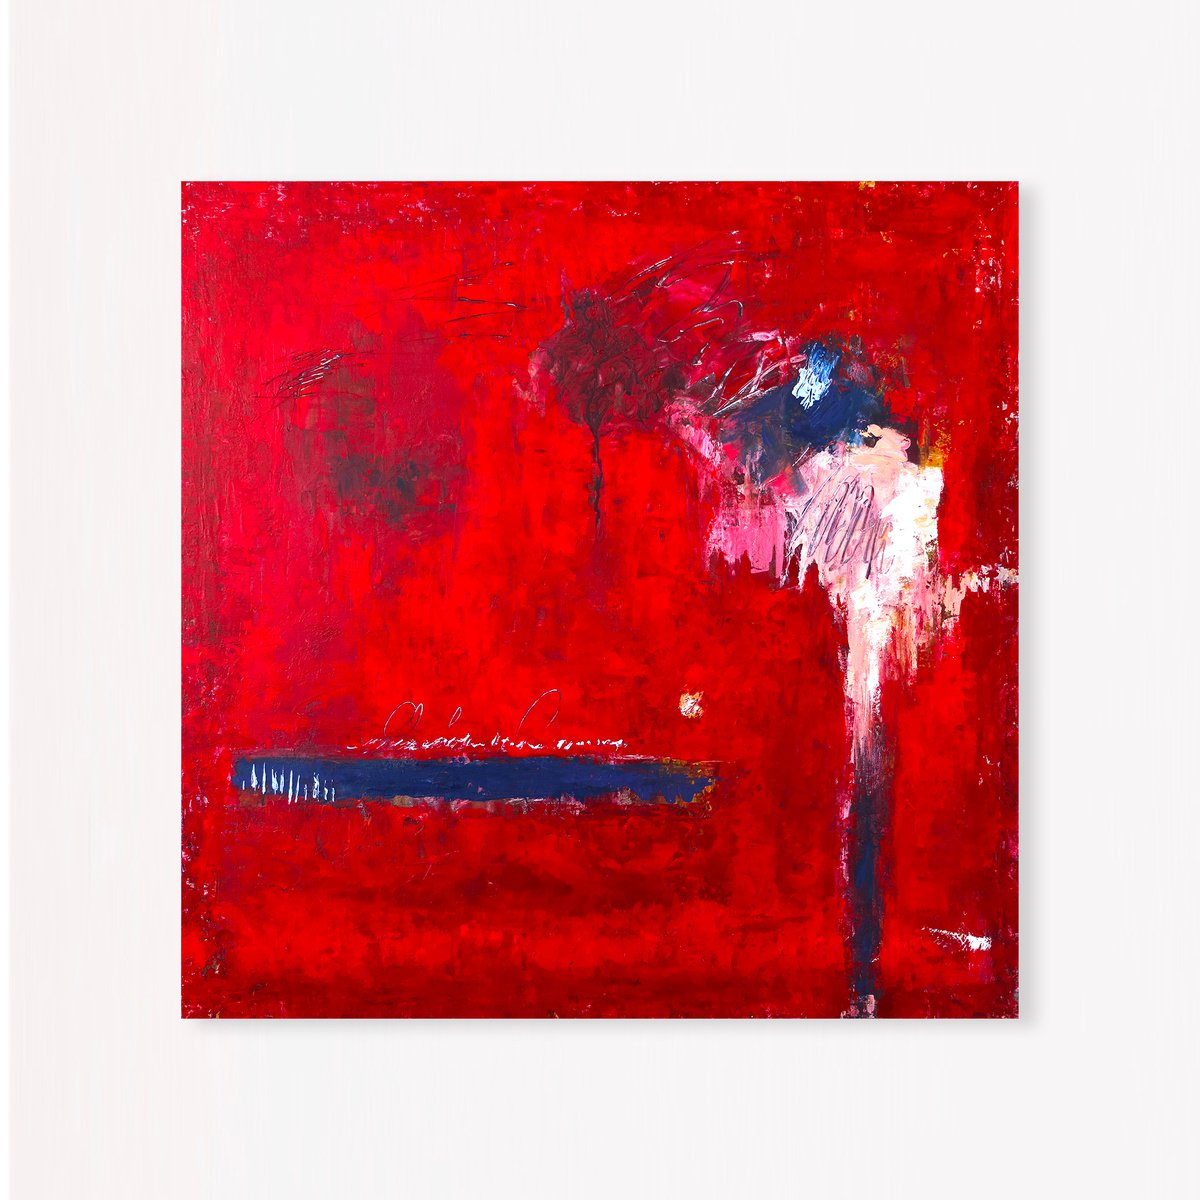 Of the passion (30x30 | 76x76 cm) by Hyunah Kim